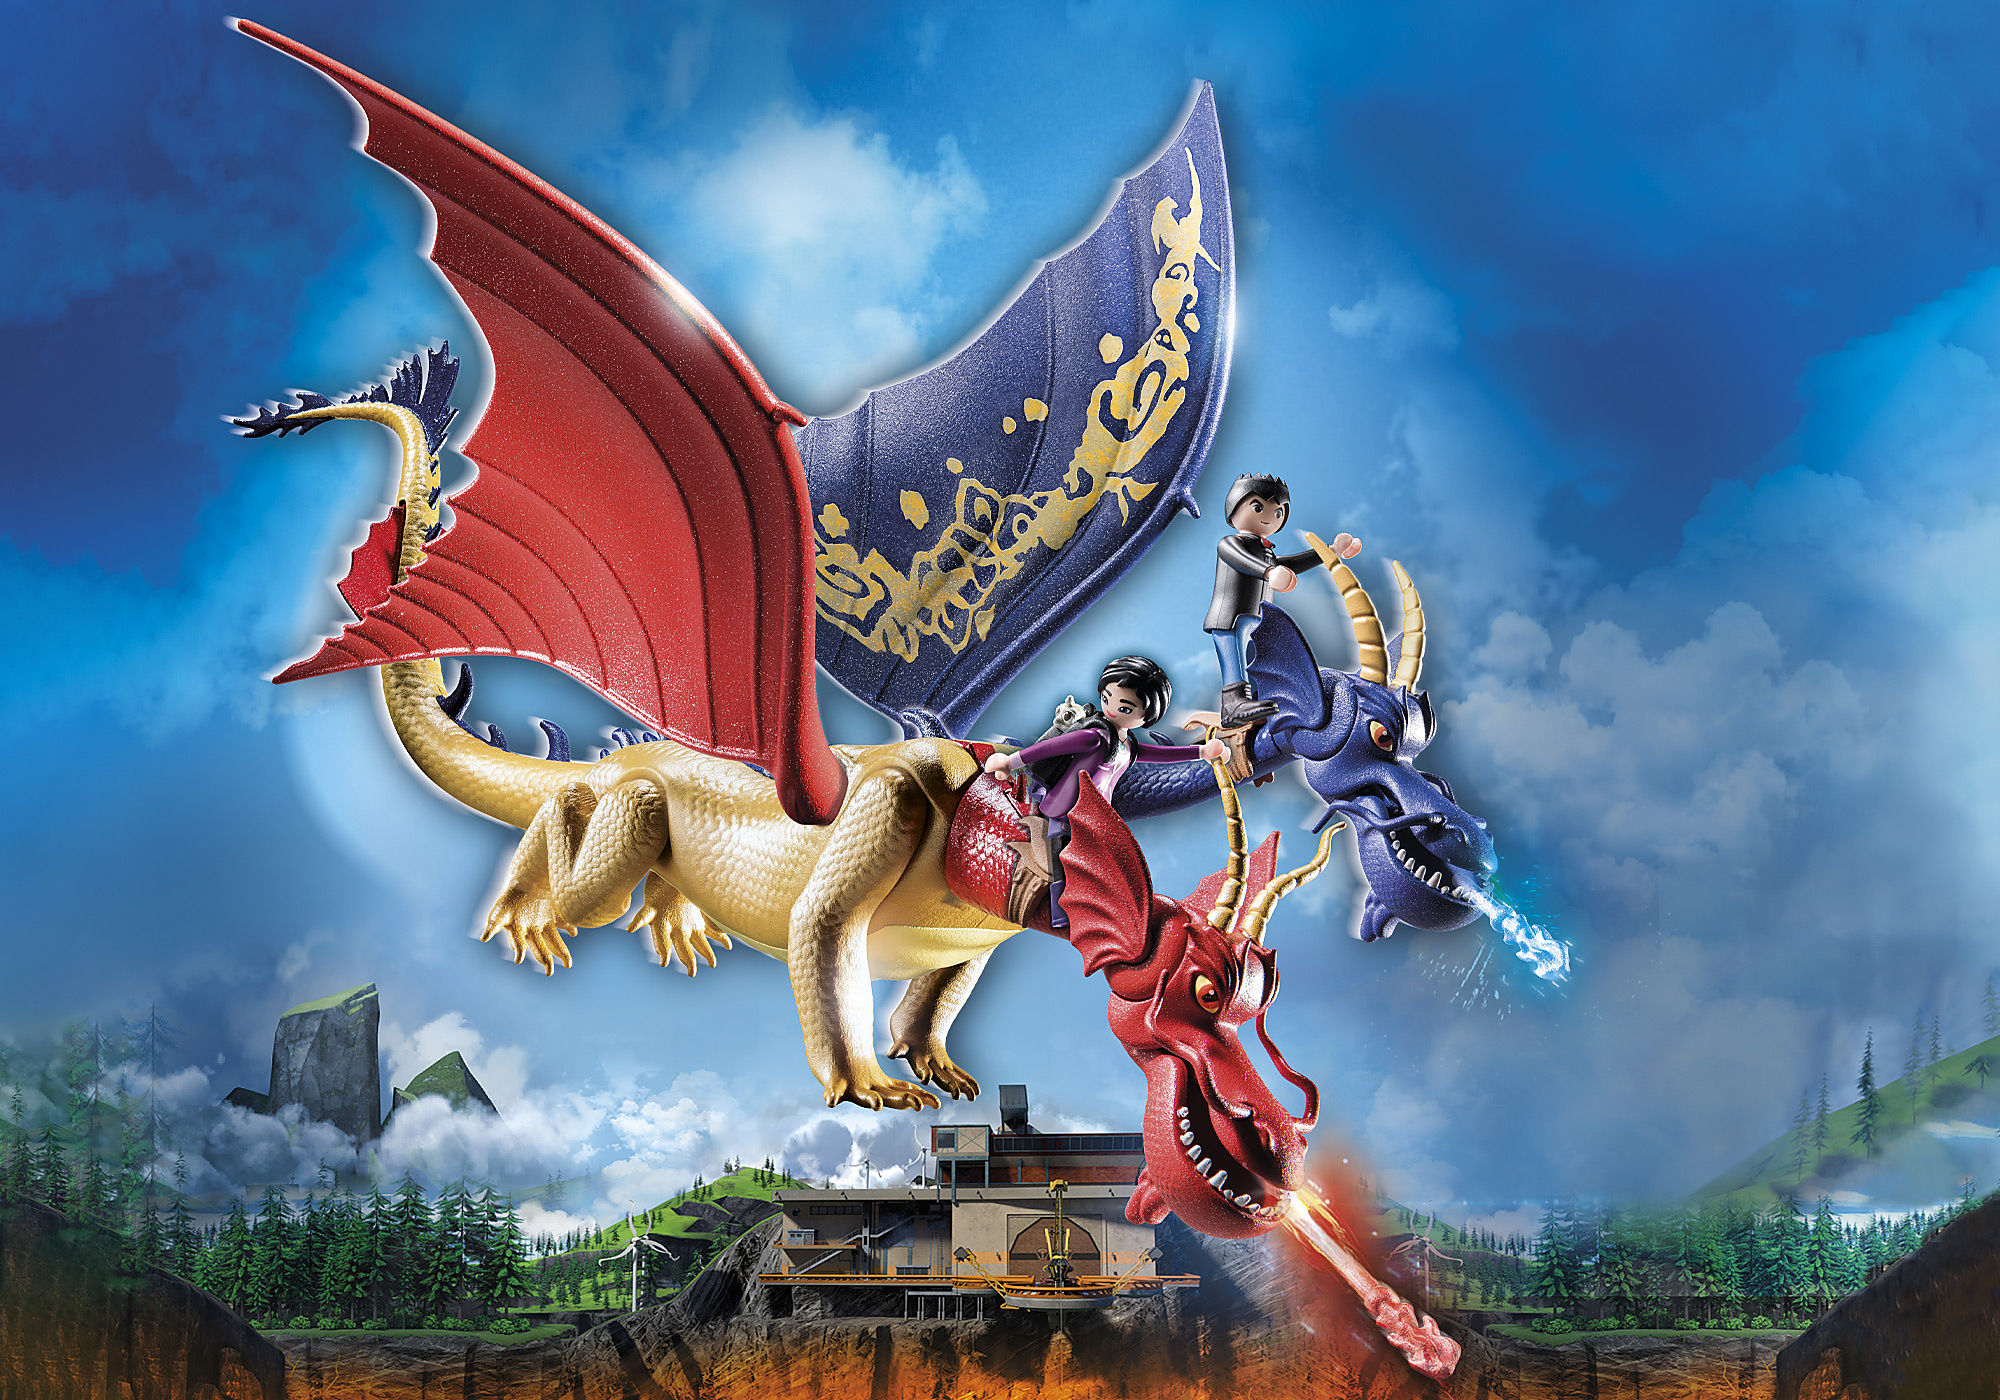 Playmobil Dragons Nine Realms: Icaris Lab 71084 – Growing Tree Toys